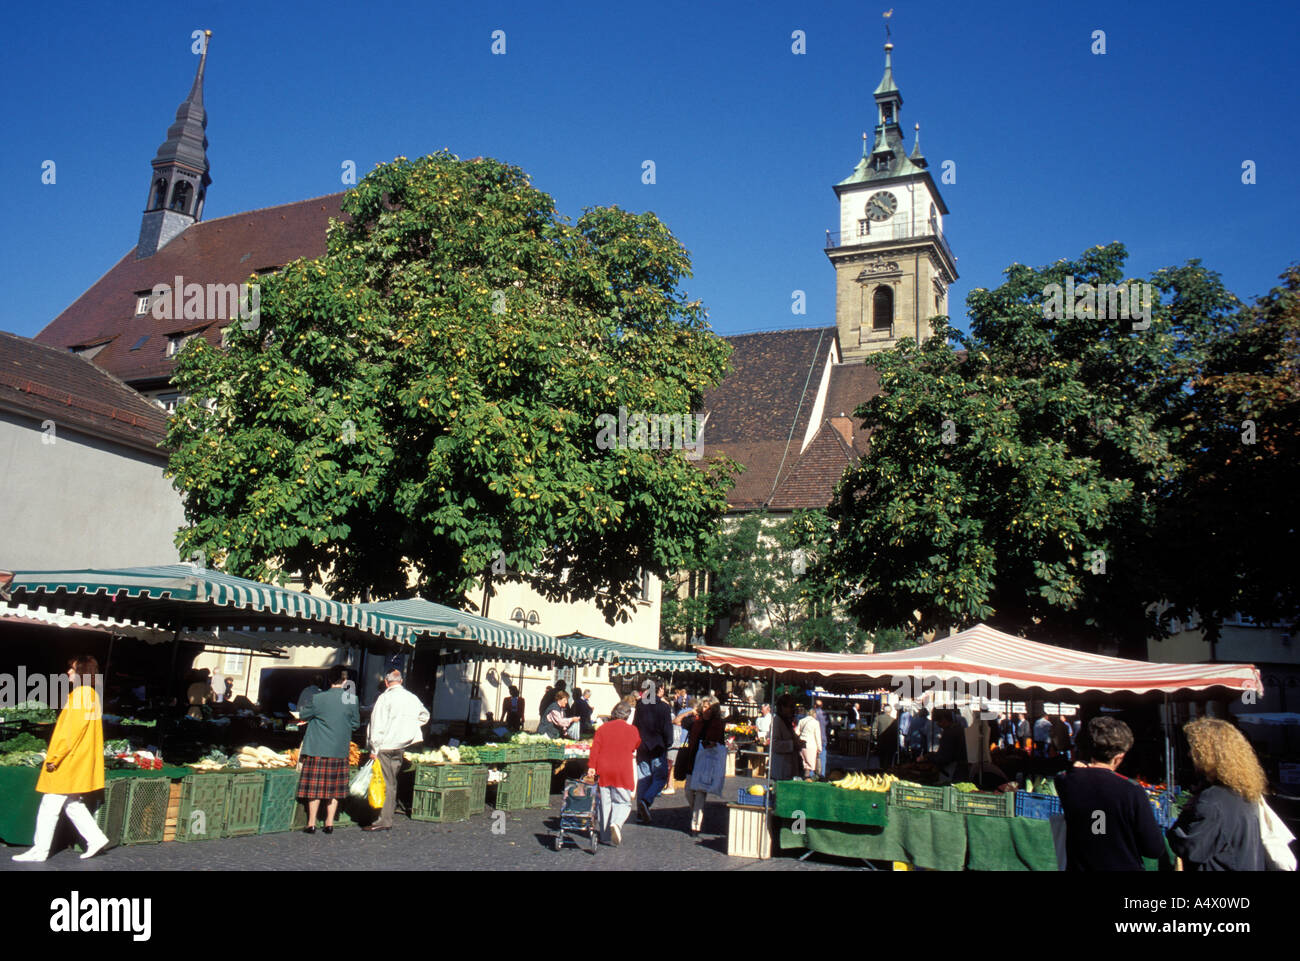 Le bancarelle del mercato al mercato settimanale in piazza mercato Bad Cannstatt Stuttgart Baden Württemberg Germania Foto Stock